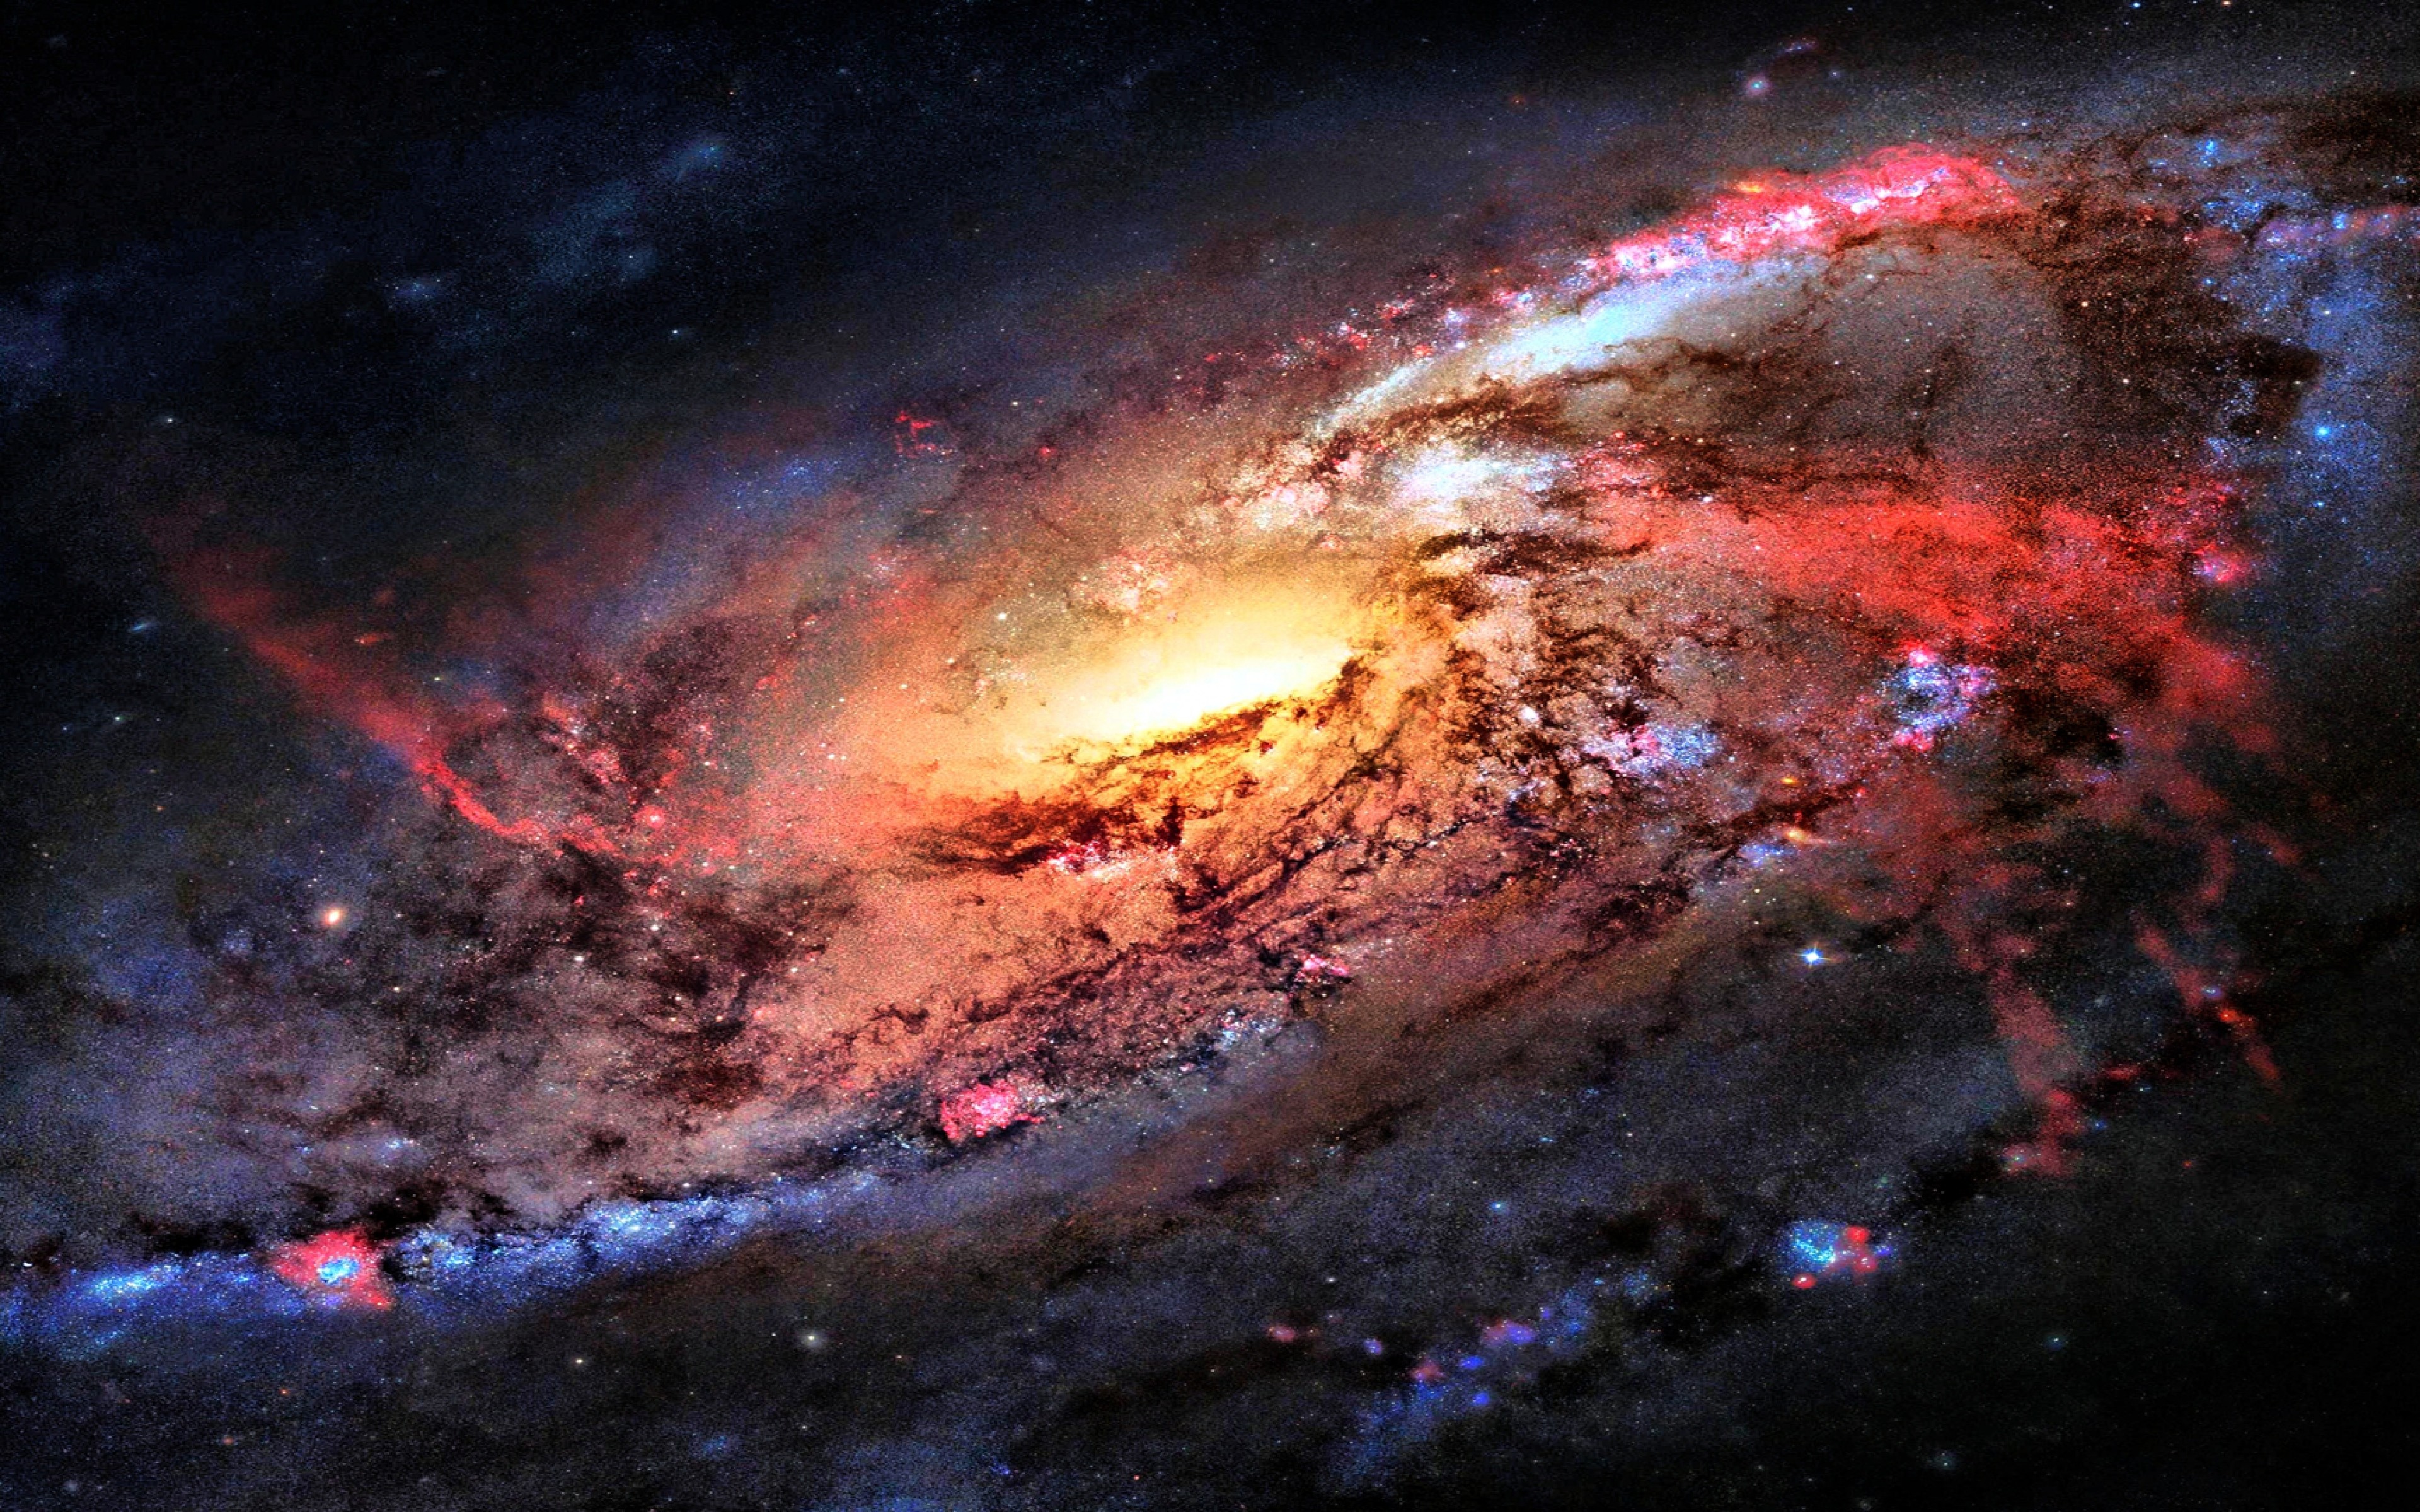 4k Galaxy Space, HD Digital Universe, 4k Wallpapers, Images